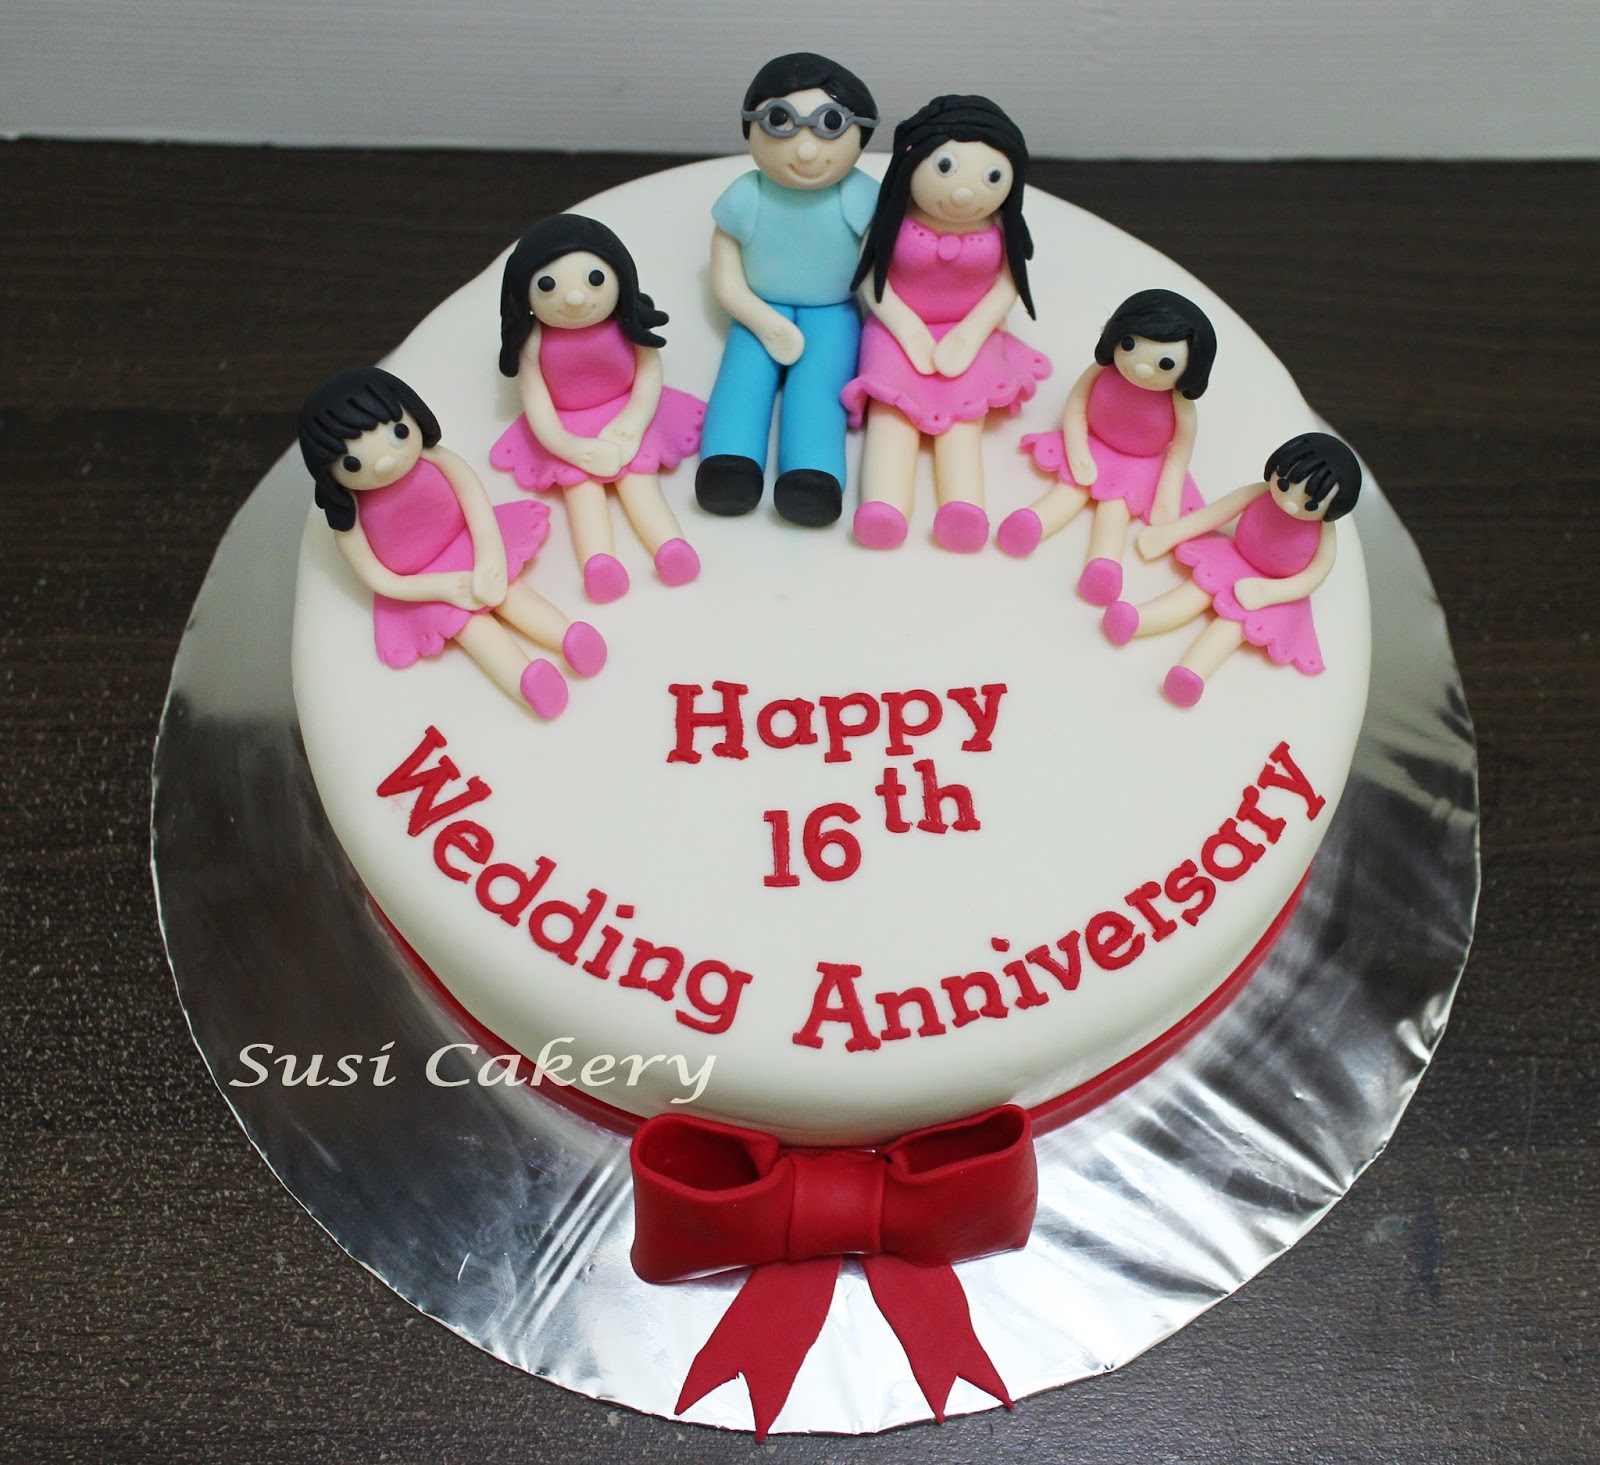 Susi Cakery Happy 16th Wedding Anniversary Cake.